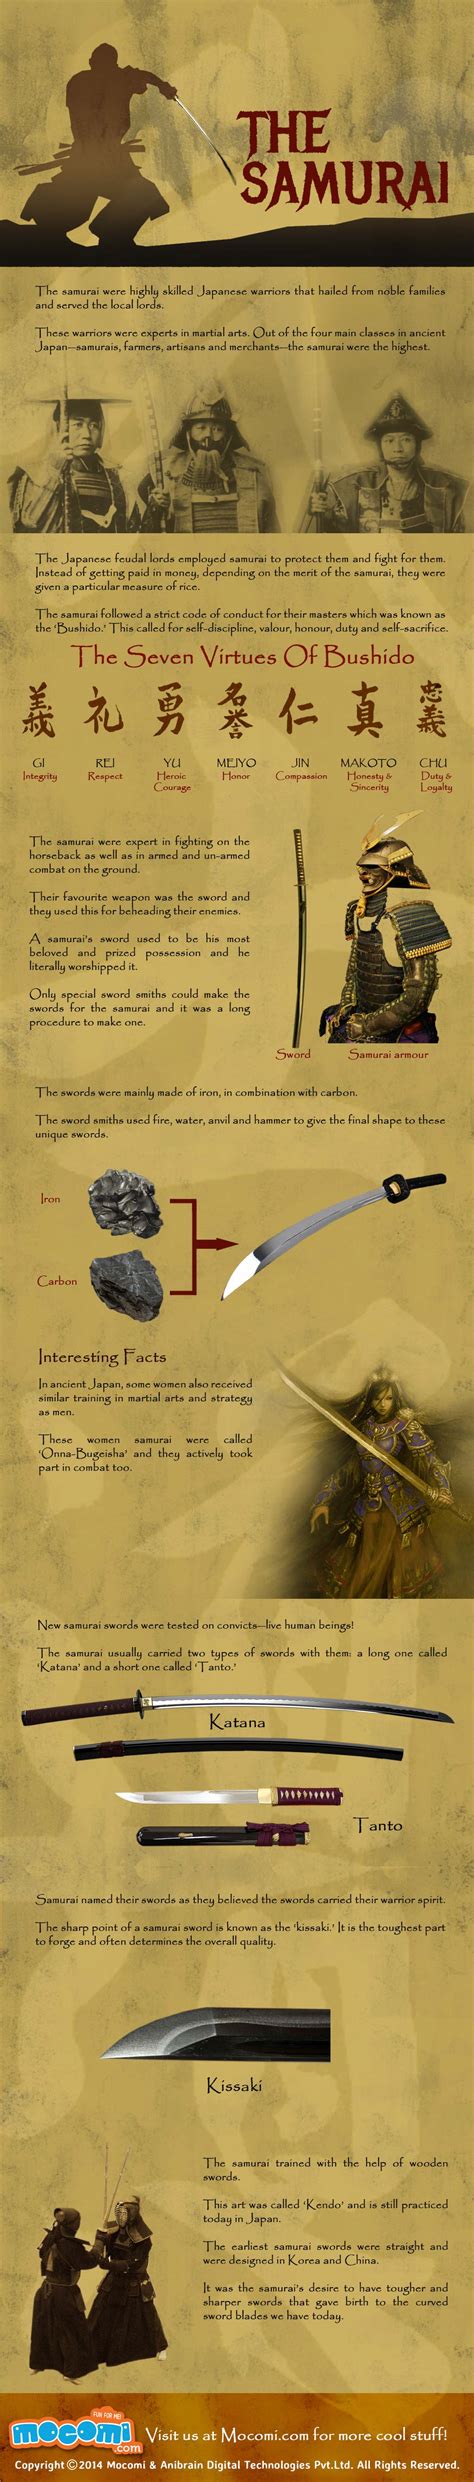 The Samurai #infographic - Visualistan